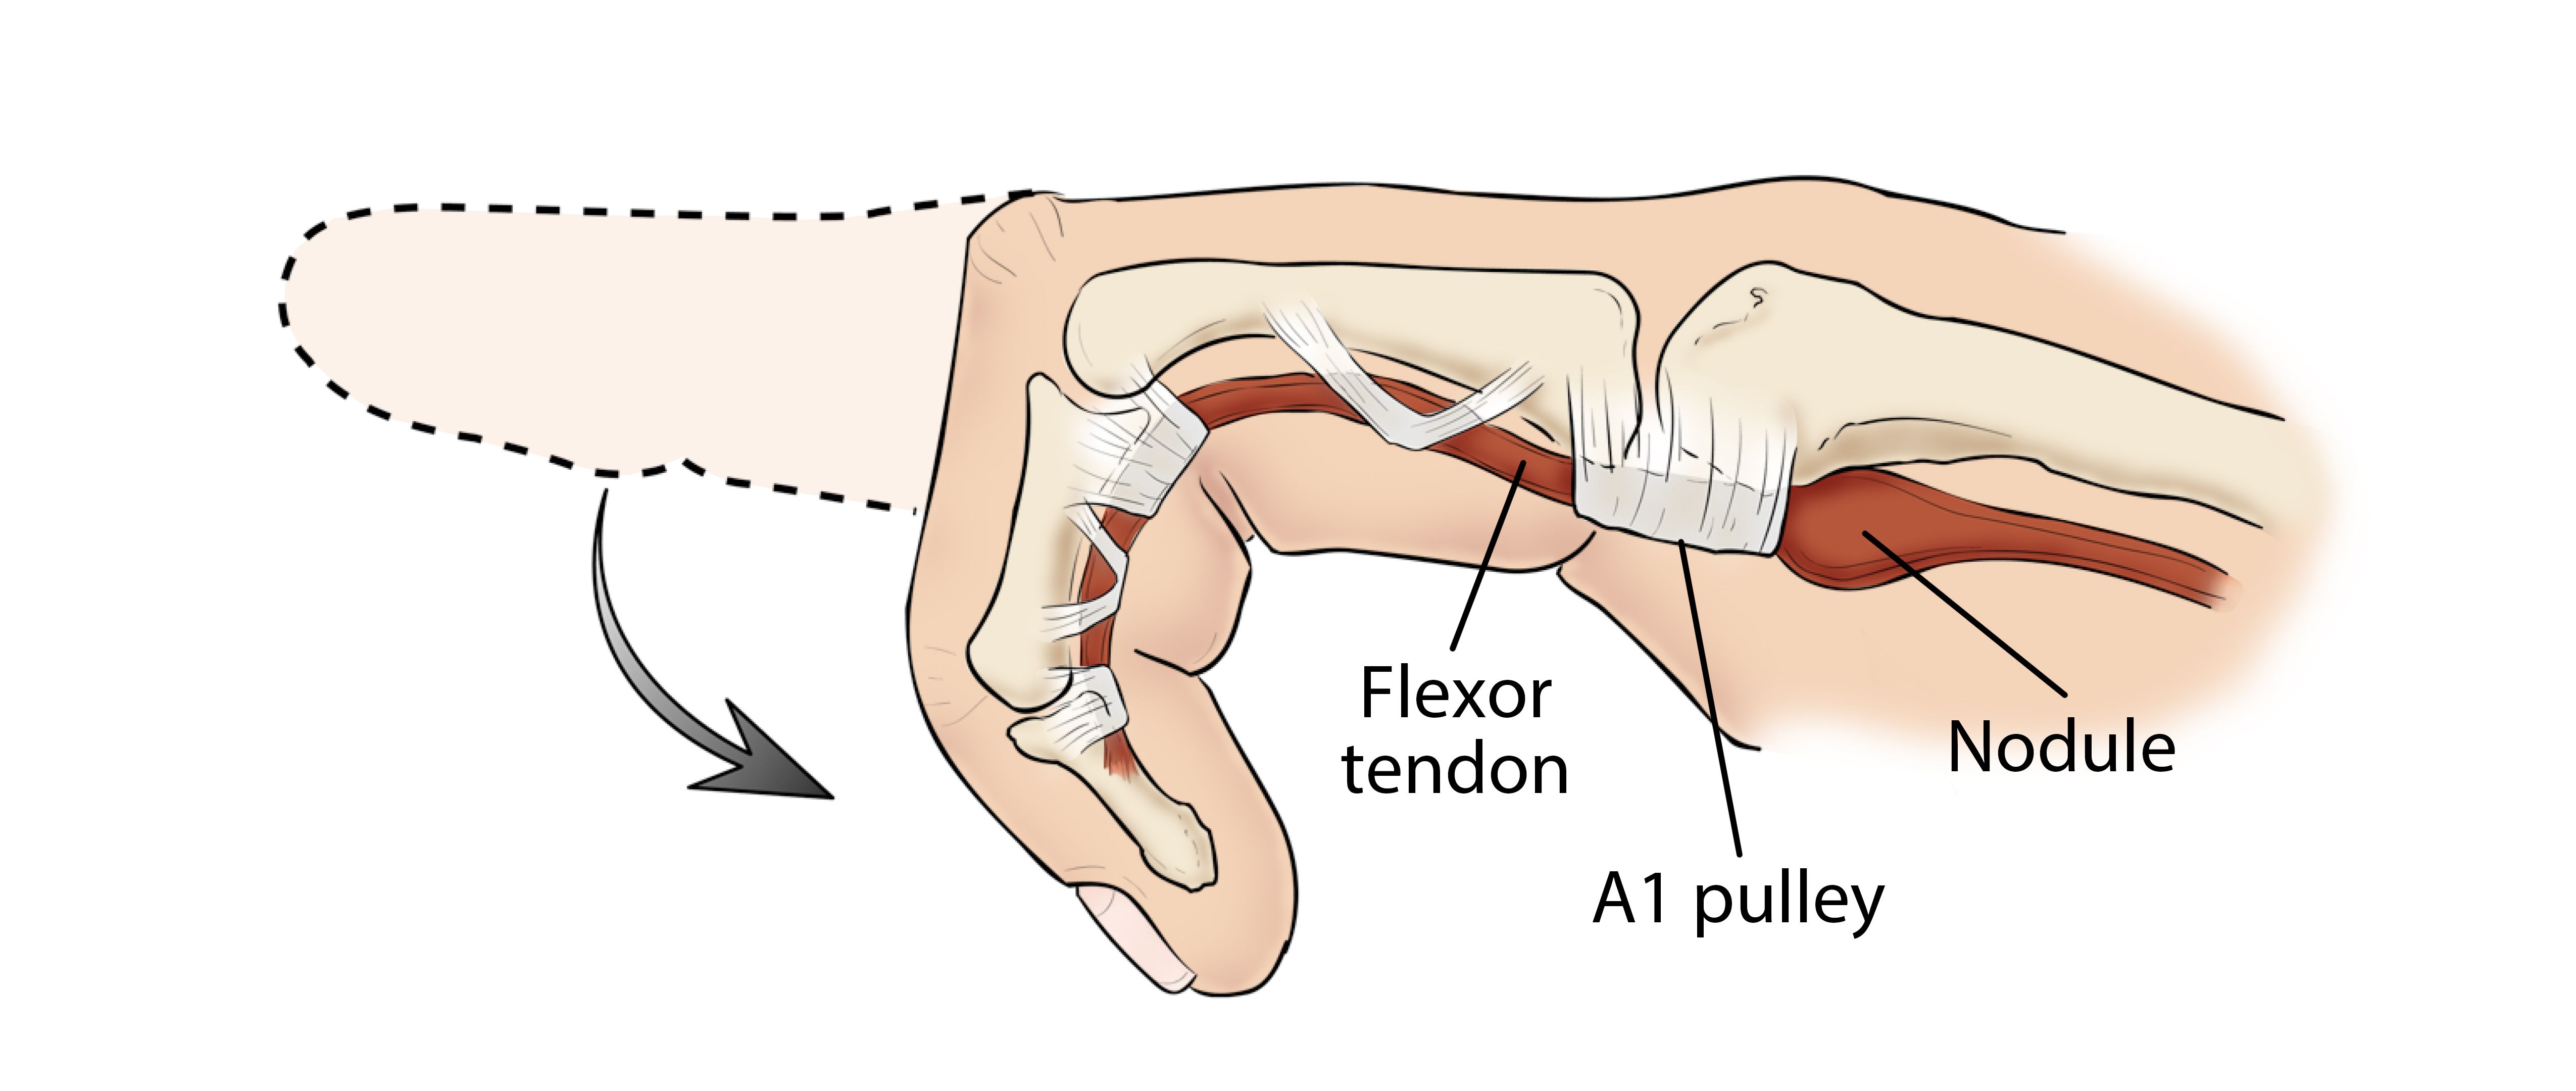 Nodule on flexor tendon